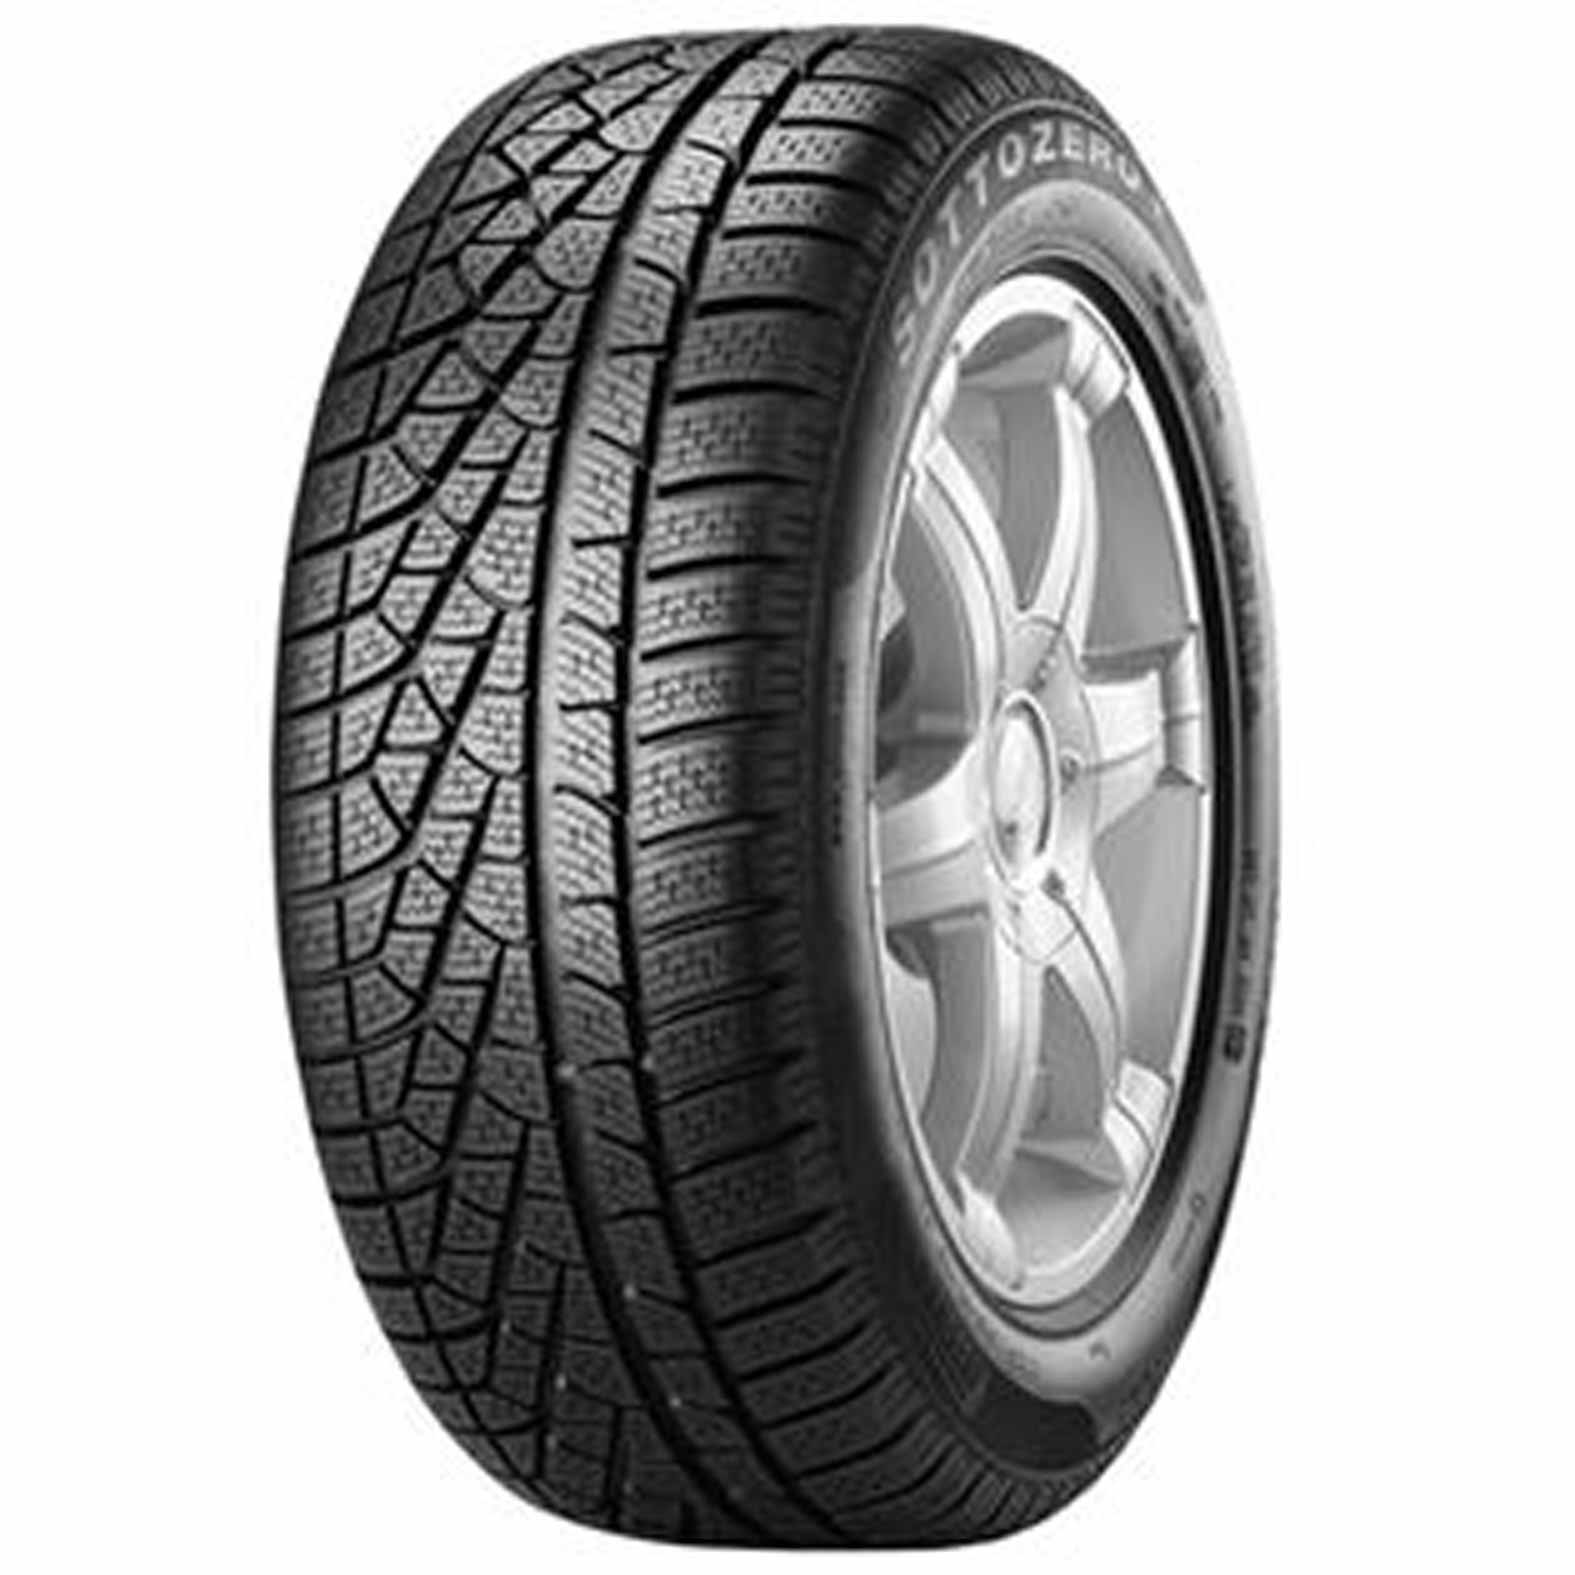 Pirelli 210 Sottozero II Tires for Winter | Kal Tire